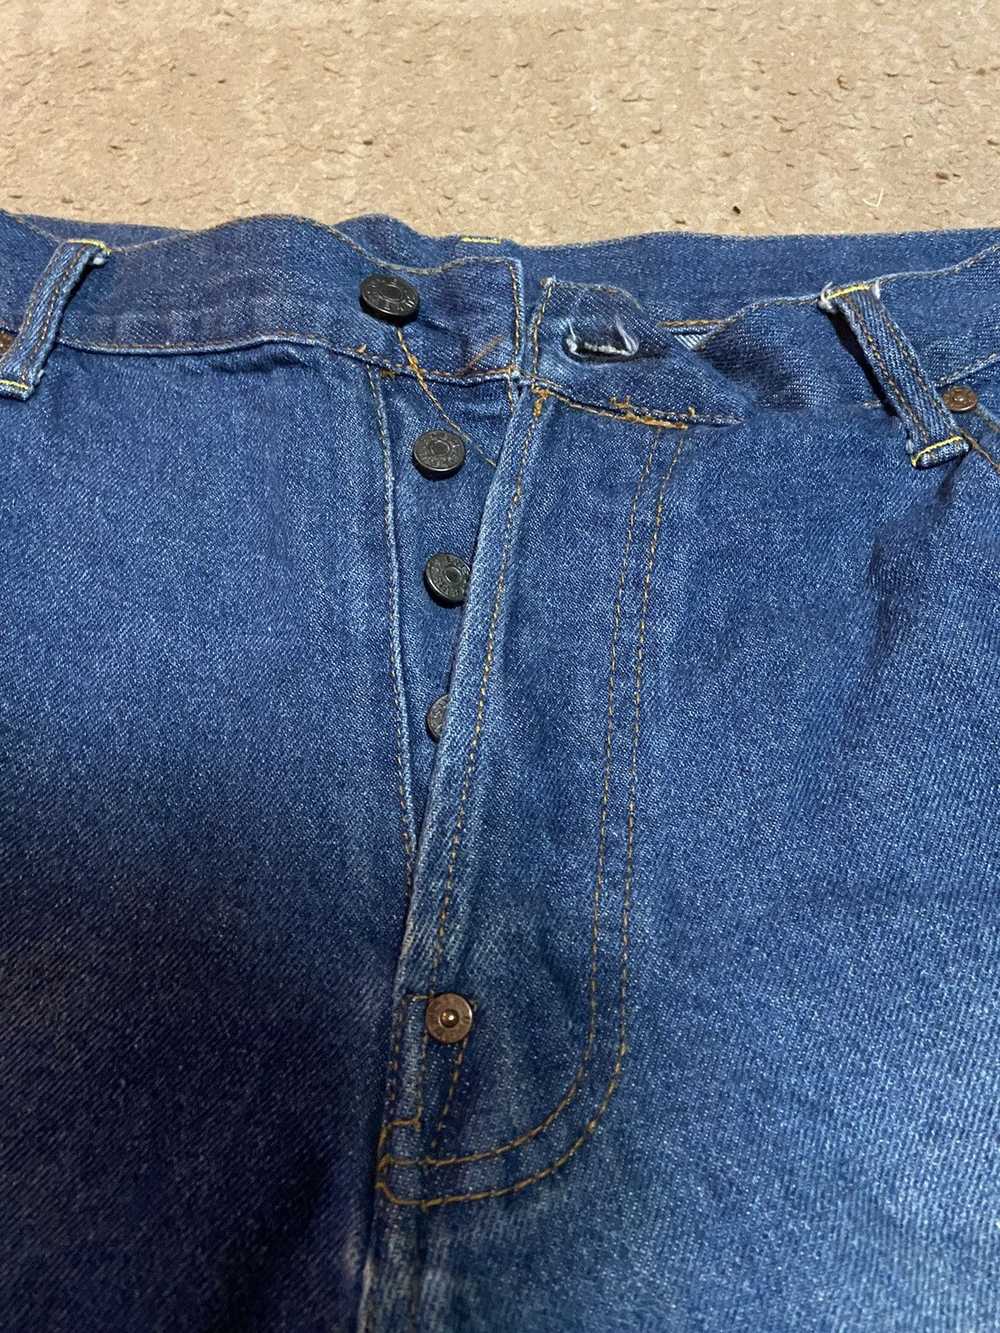 Evisu × Vintage Multi Pocket Evisu Indigo Jeans - image 7